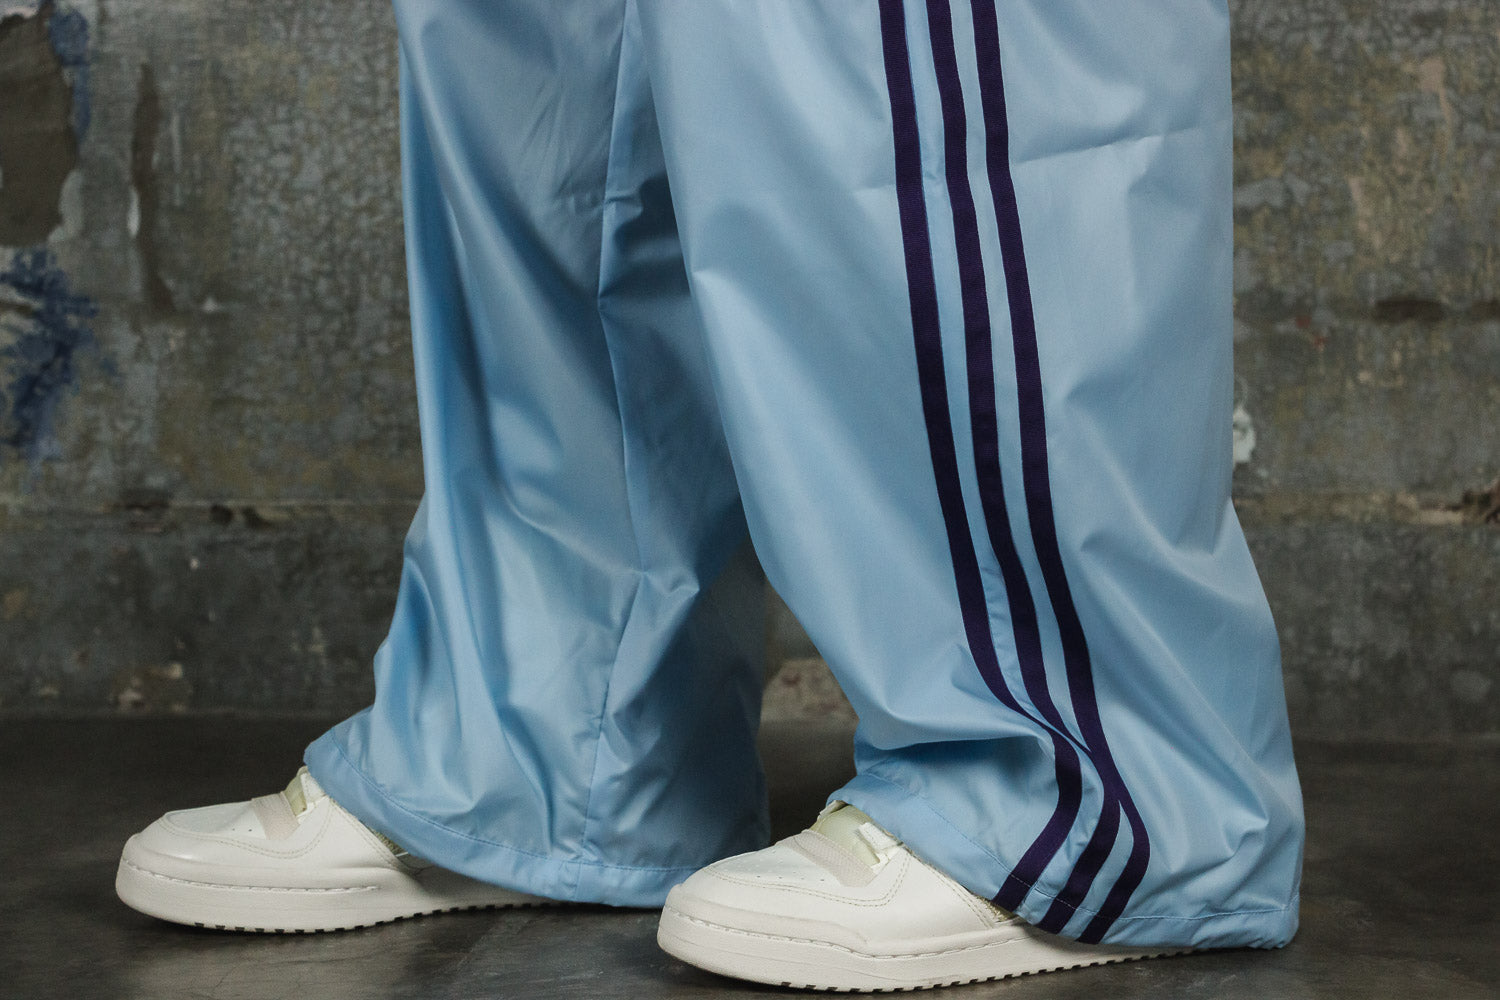 Adidas Originals - Kerwin Frost Baggy Tracksuit Pants